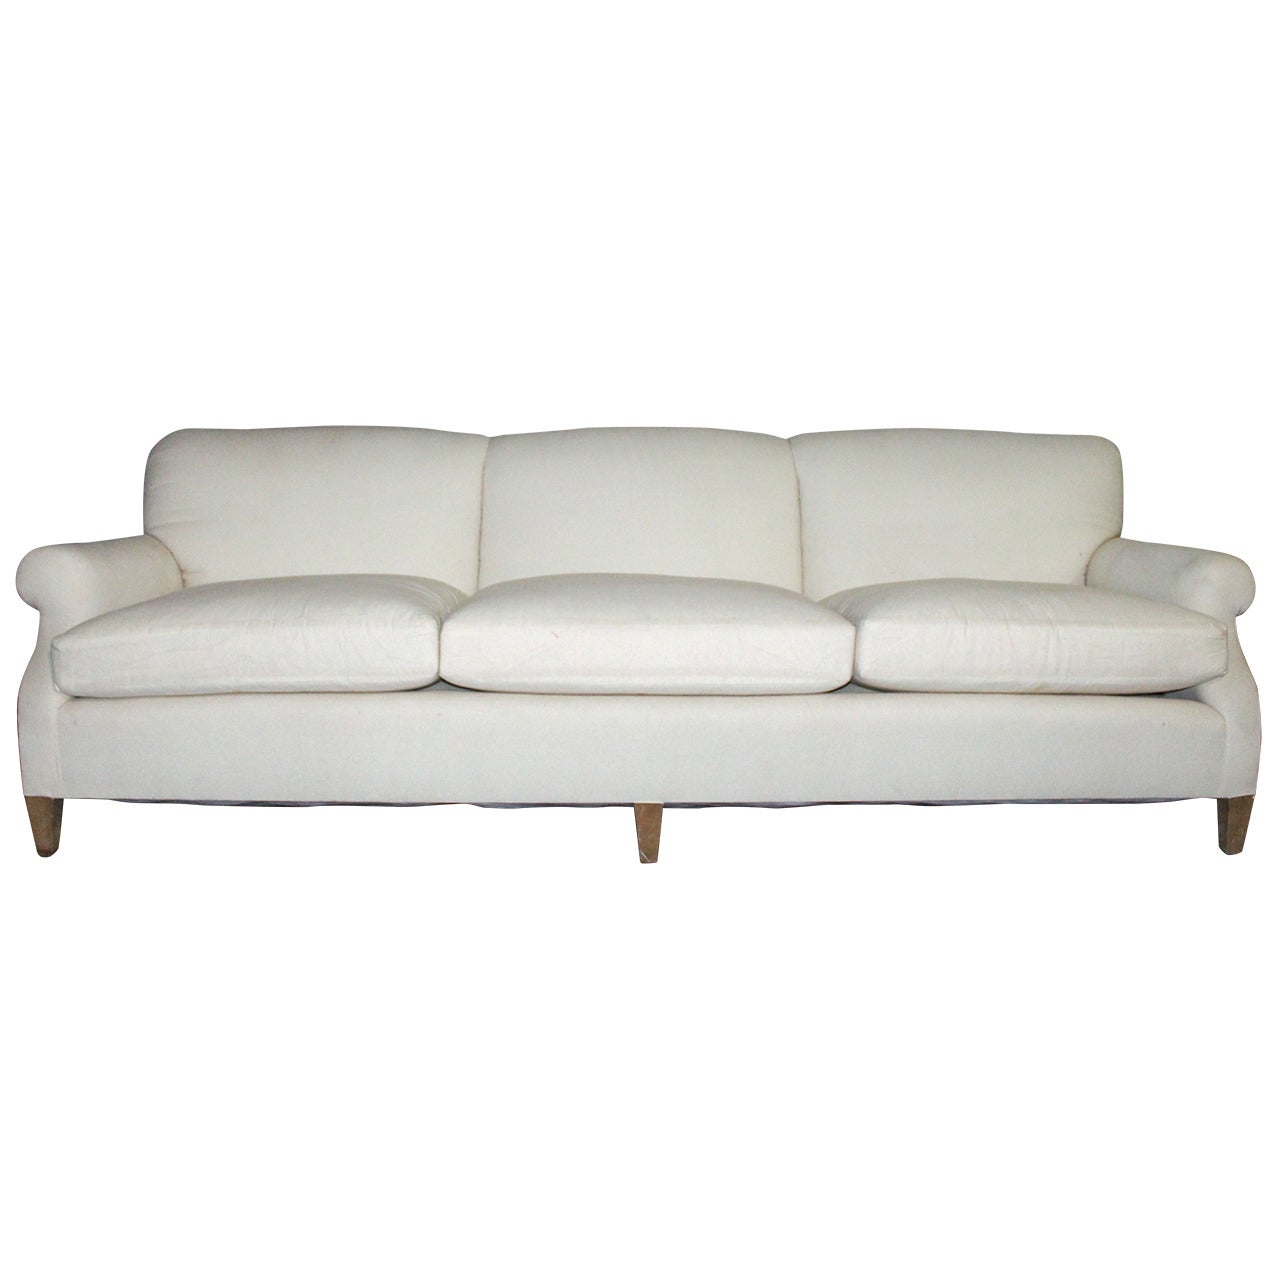 Gracious and Comfortable, Fully Refurbished Sofa in Muslin